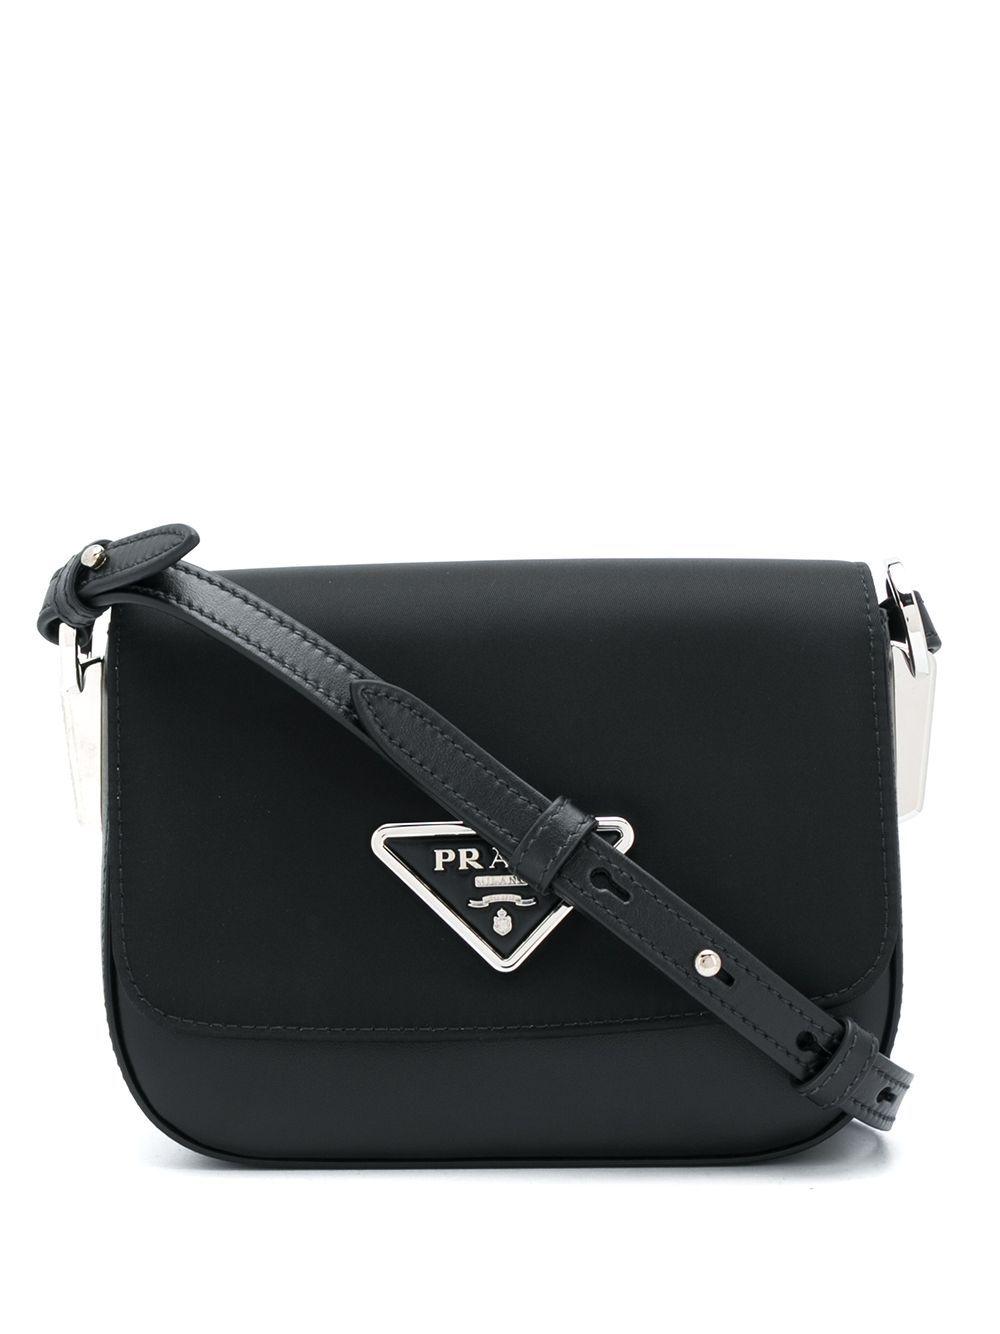 Prada Synthetic Polyester Shoulder Bag in Black - Lyst